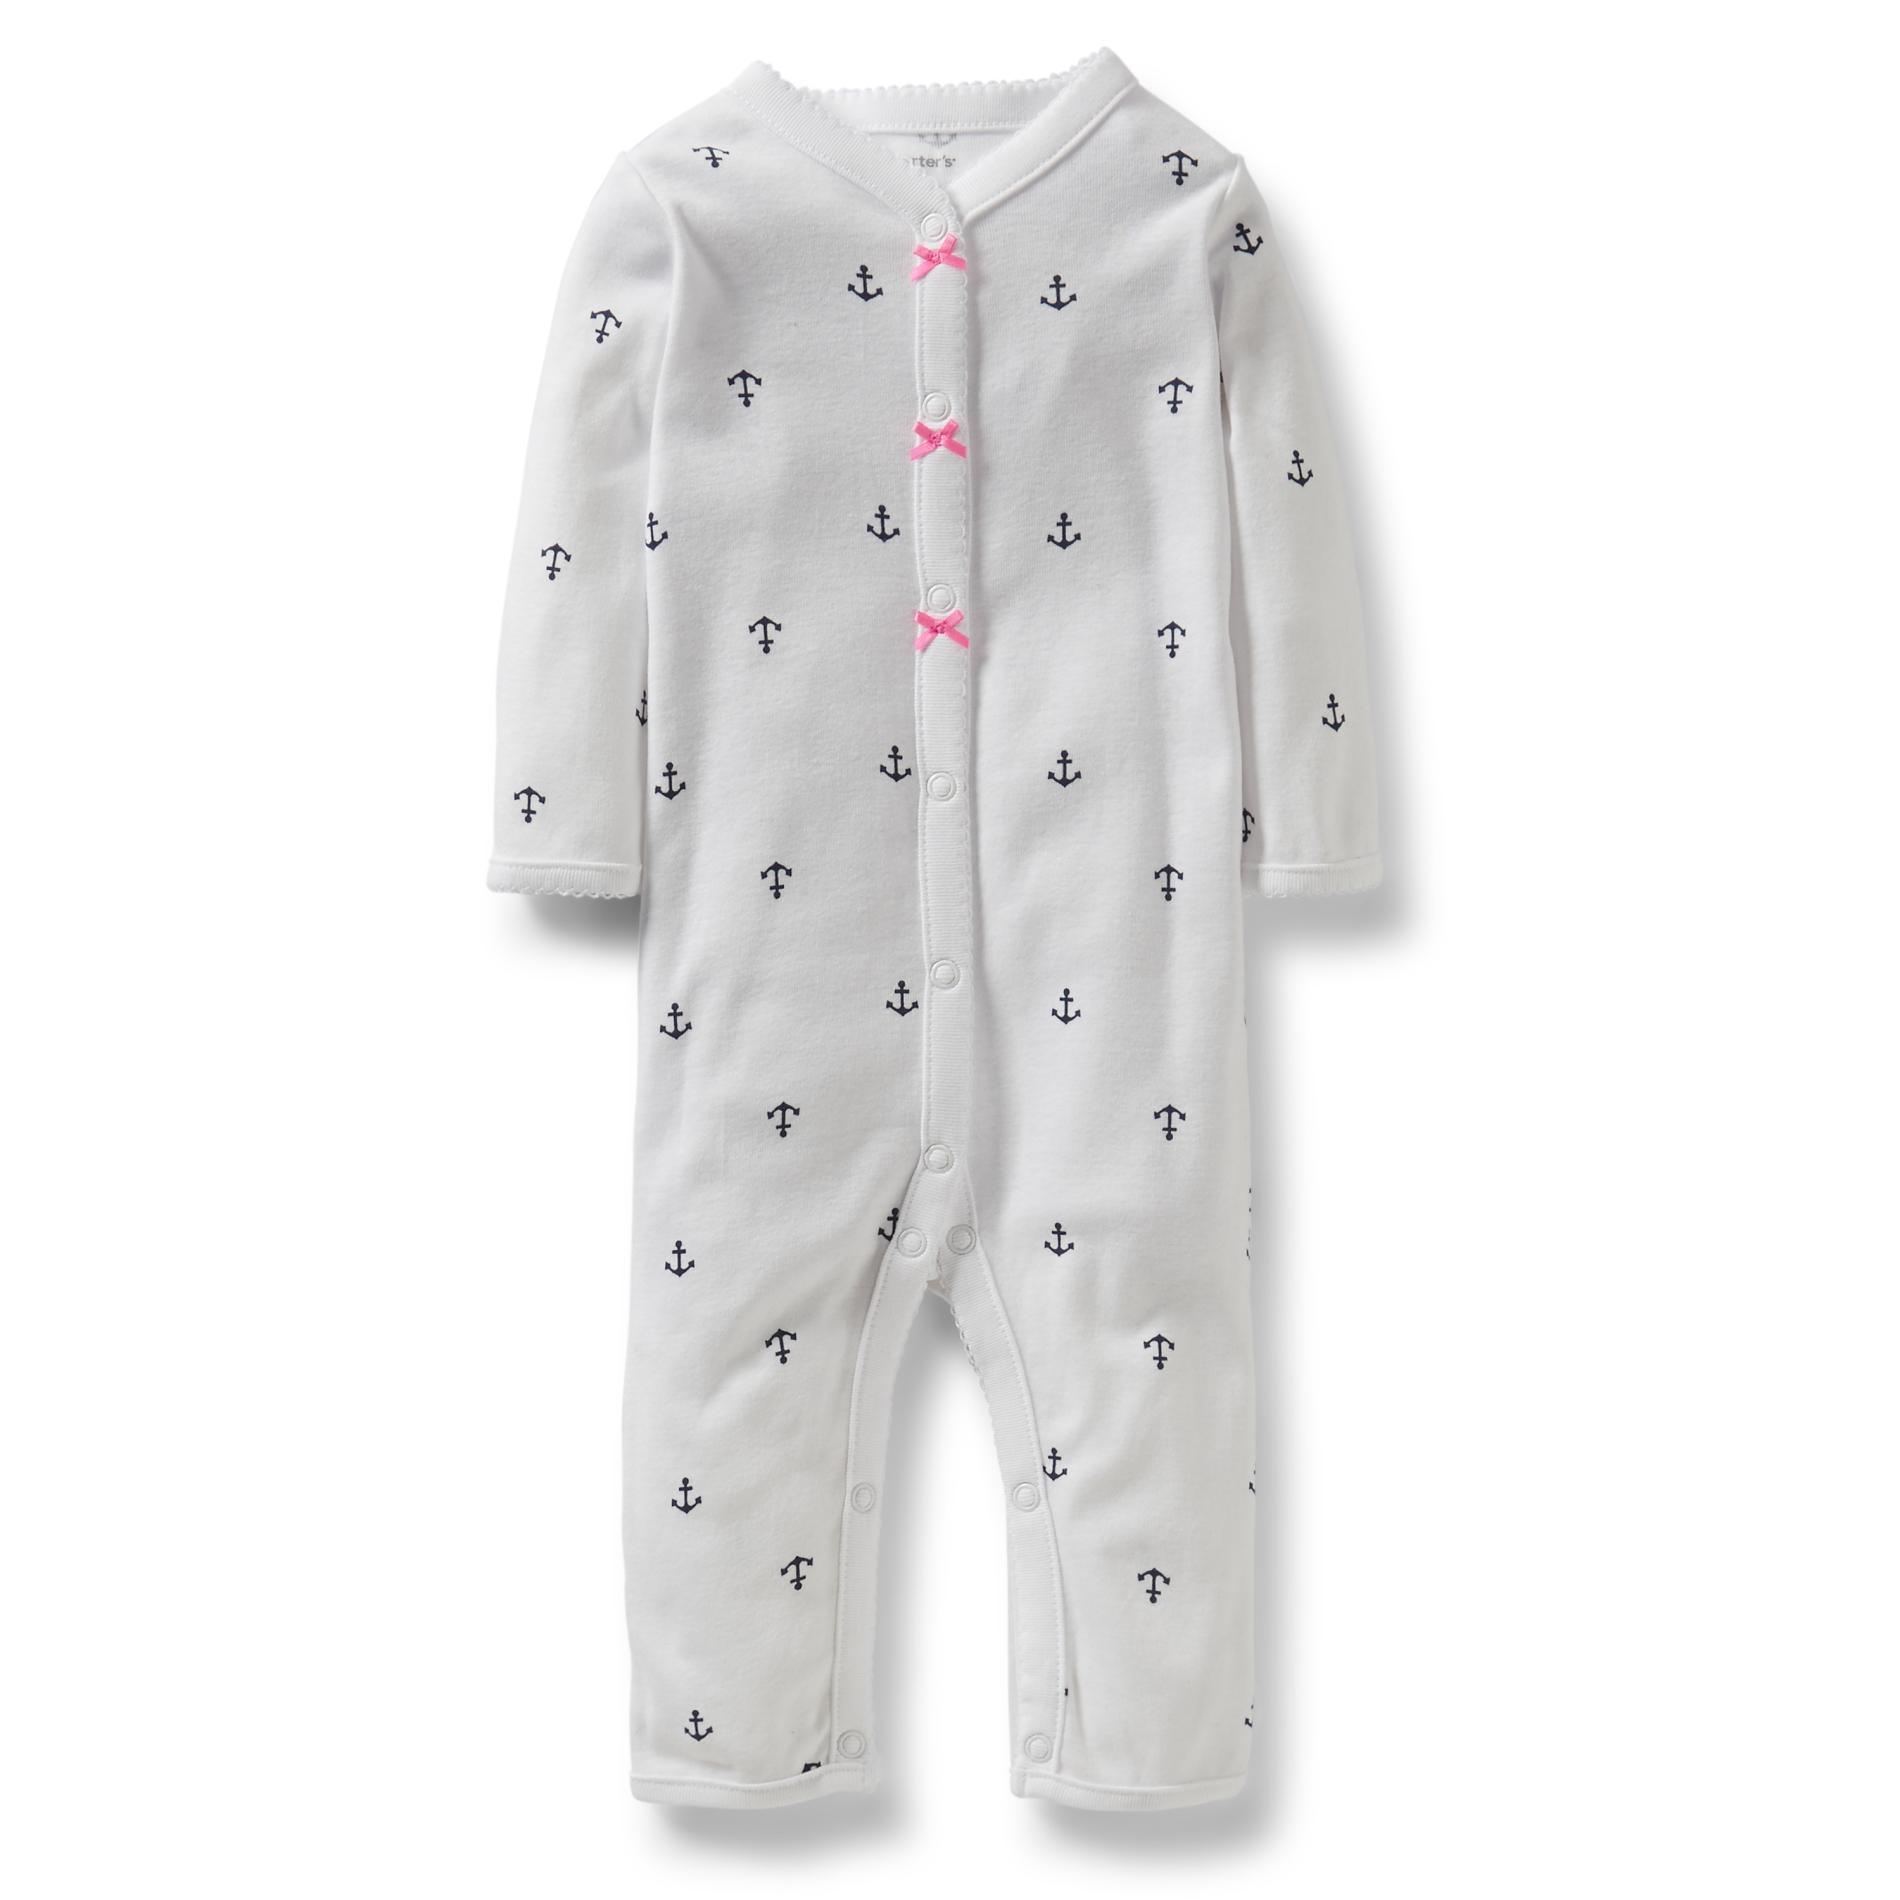 Carter's Newborn Girl's Sleeper Pajamas - Anchors